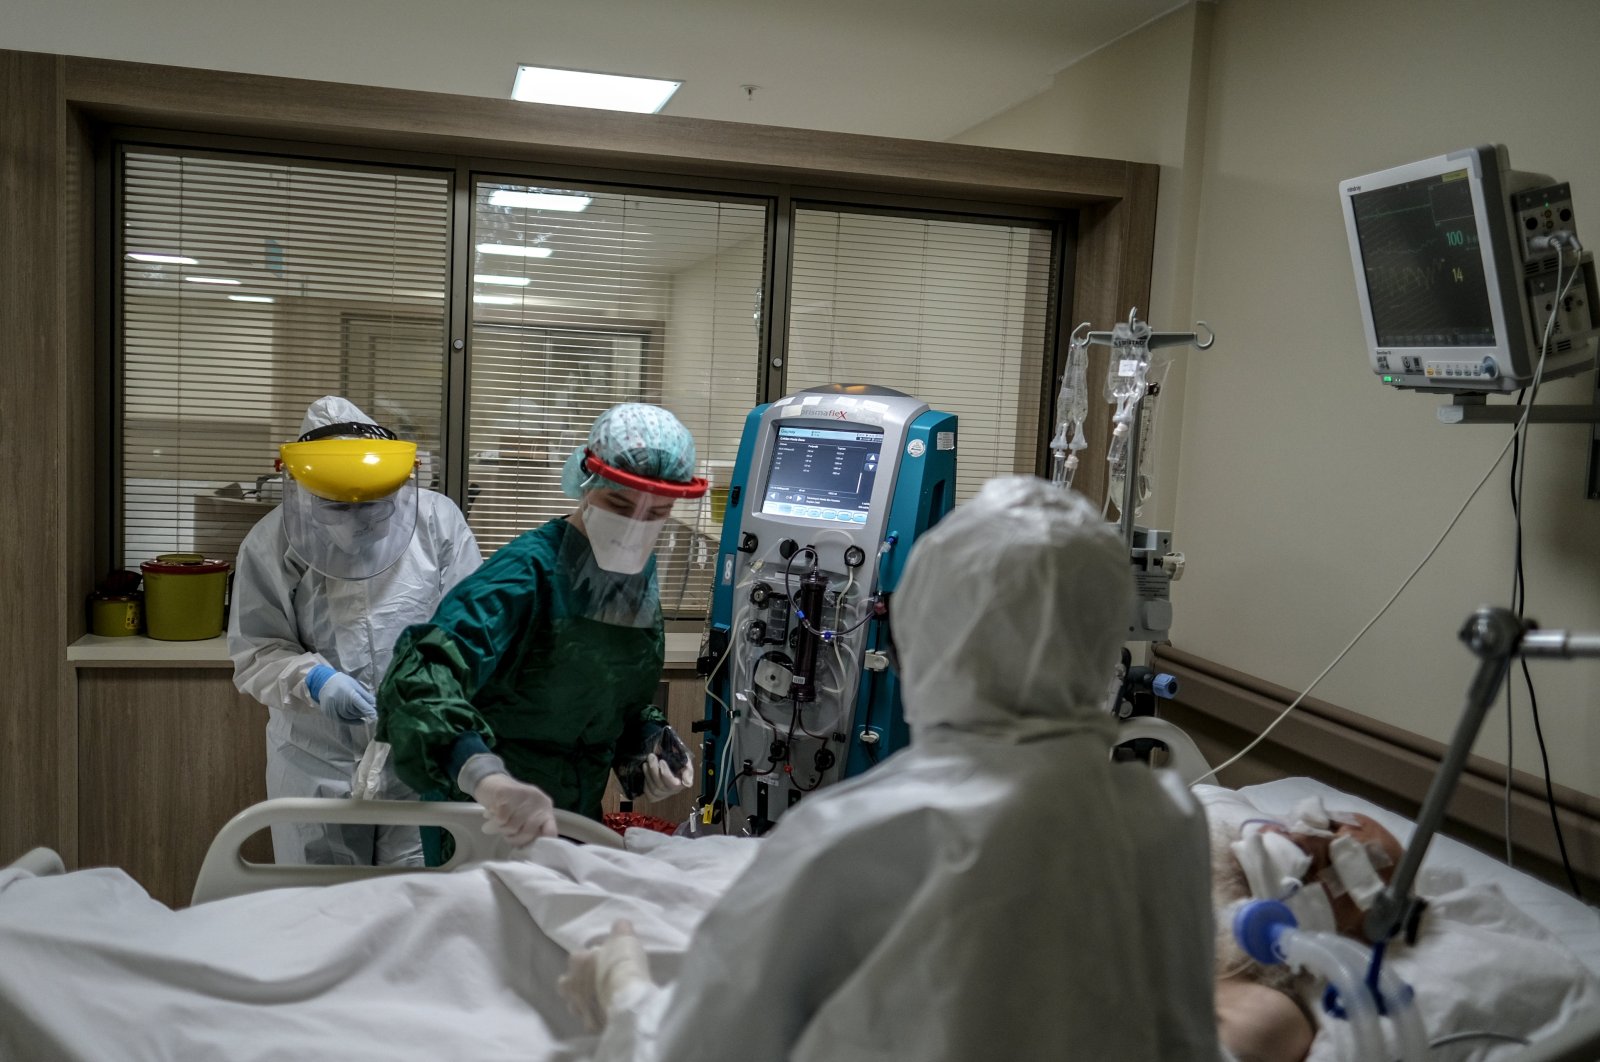 Doctors and health professionals visit a COVID-19 patient at Kartal Lütfi Kırdar Hospital in Istanbul's Kartal district, Turkey, May 6, 2020. (Sabah File Photo)